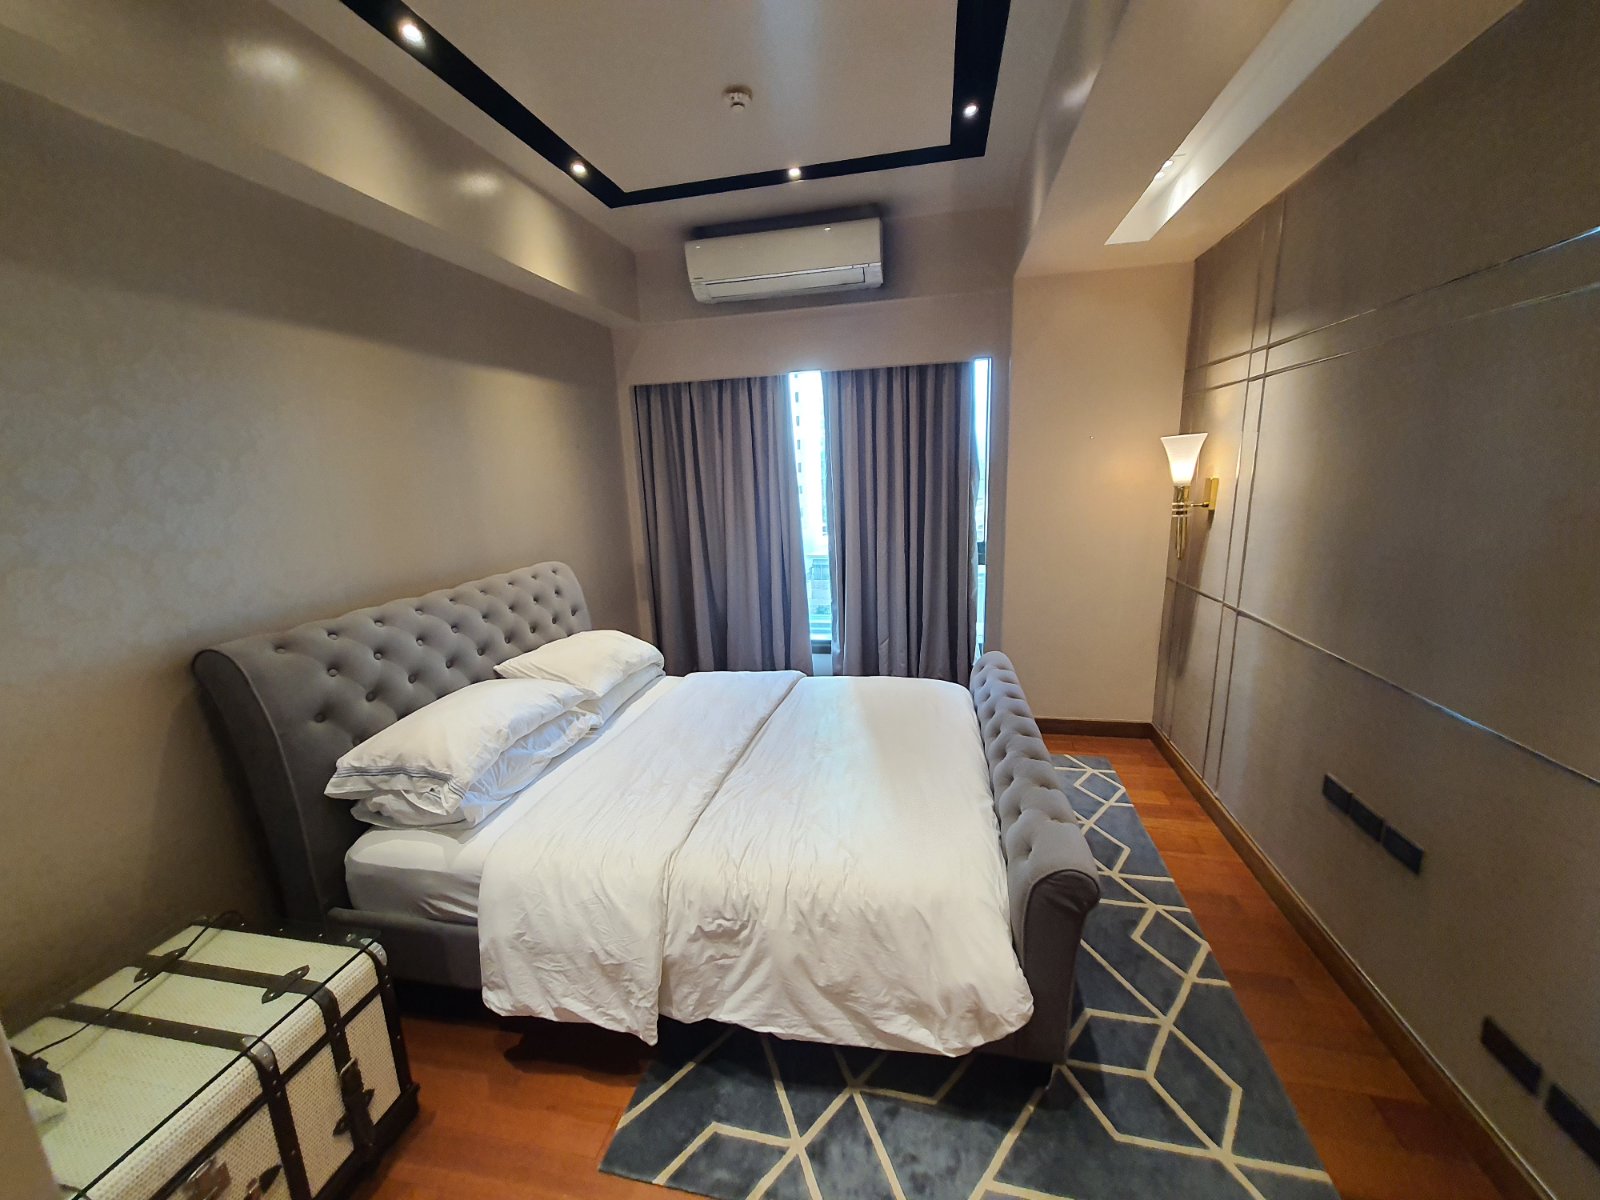 Condo For Rent in Legazpi Village 2 Bedrooms Pet friendly